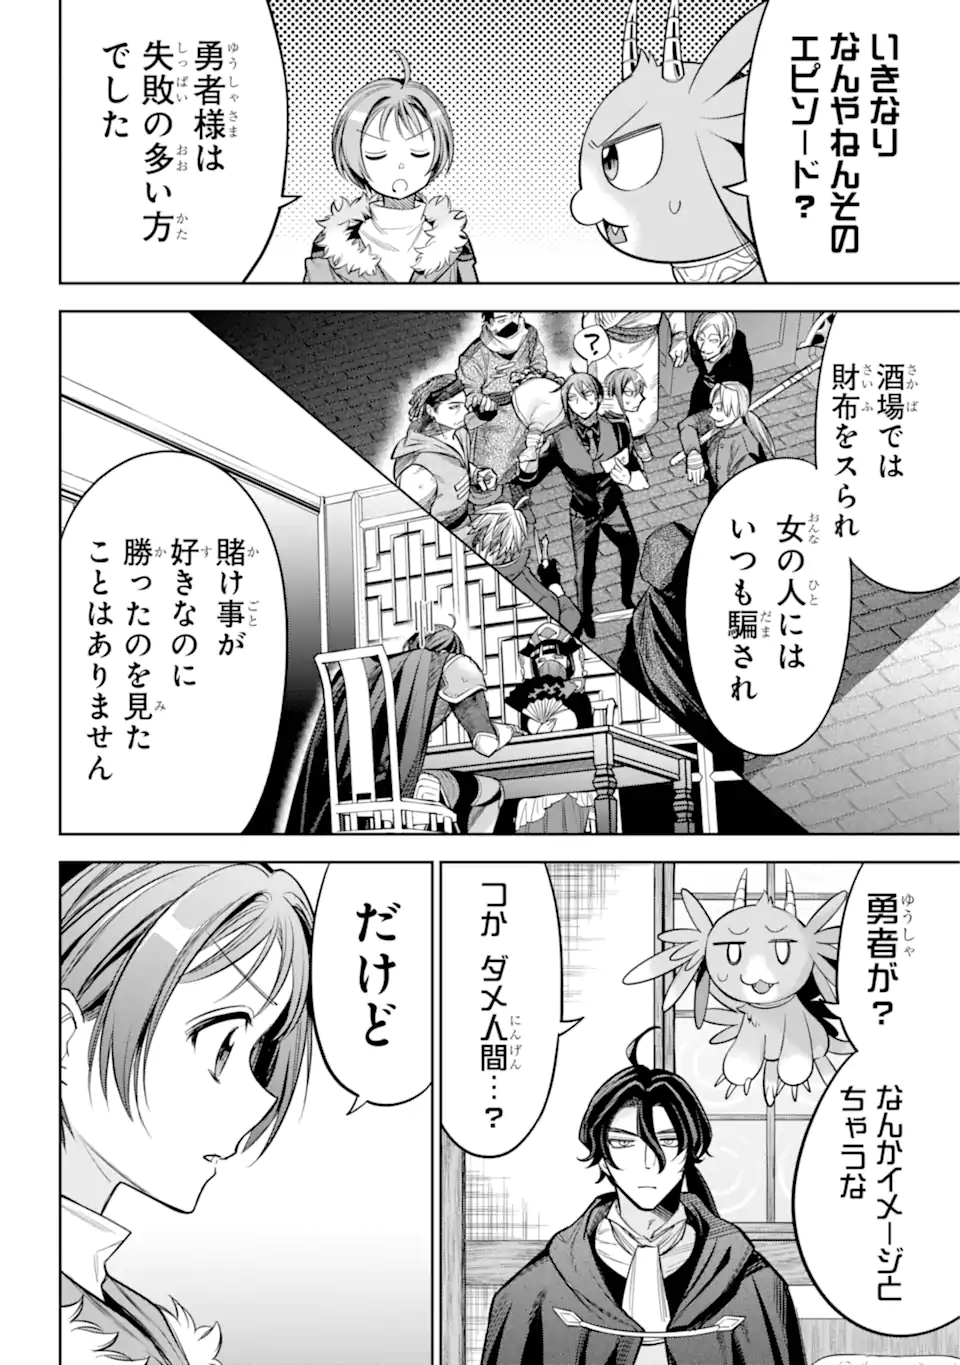 Yuusha Party no Nimotsu Mochi - Chapter 15.4 - Page 2